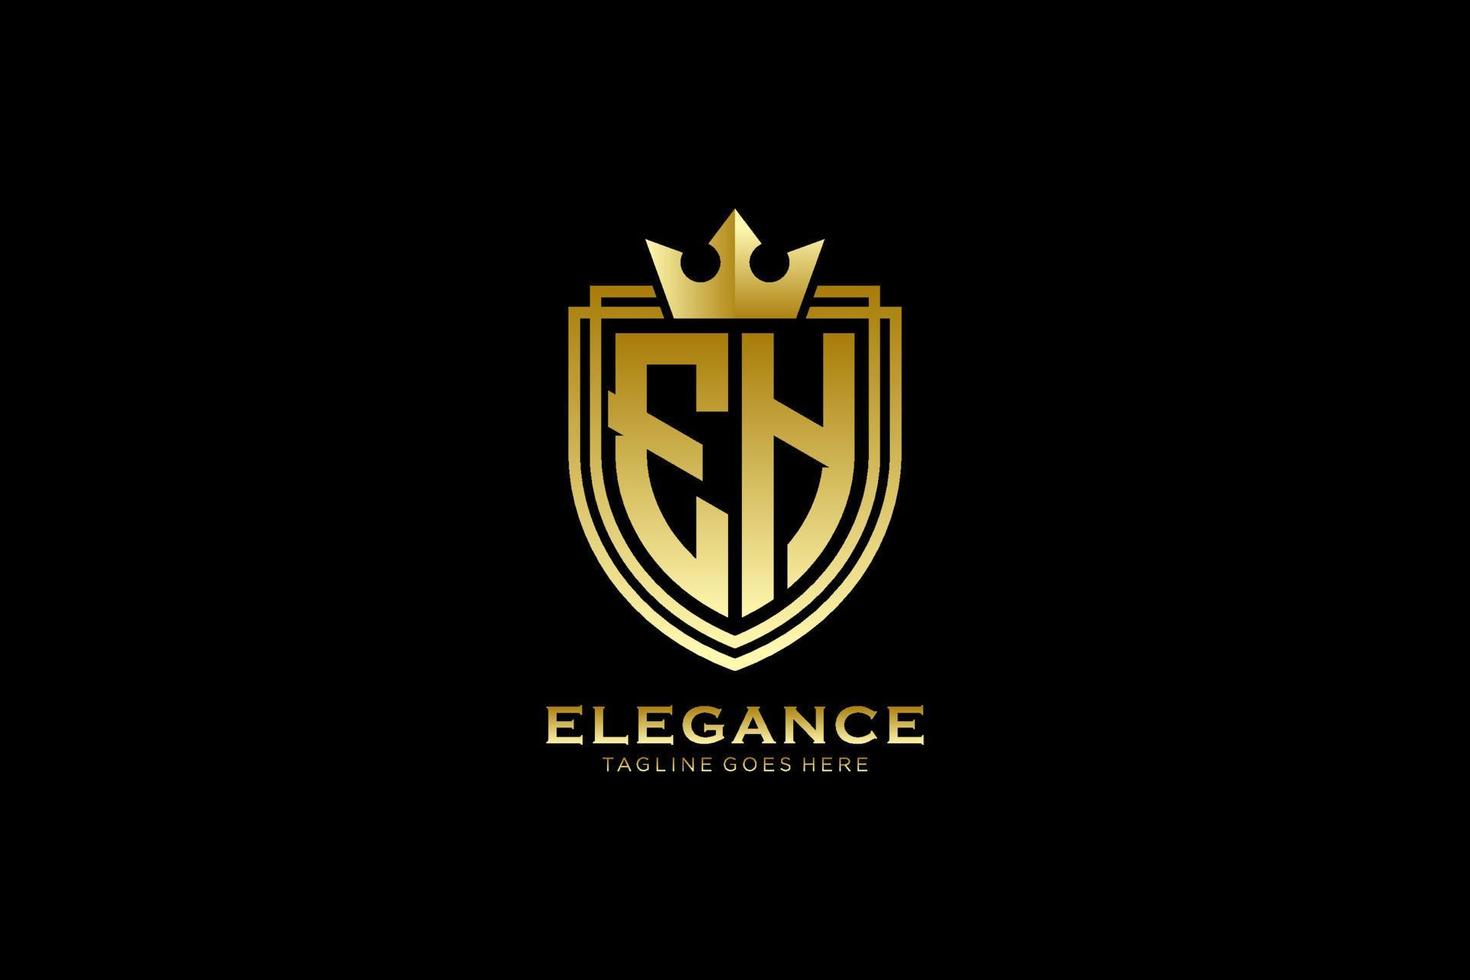 inicial eh elegante logotipo de monograma de luxo ou modelo de crachá com pergaminhos e coroa real - perfeito para projetos de marca luxuosos vetor